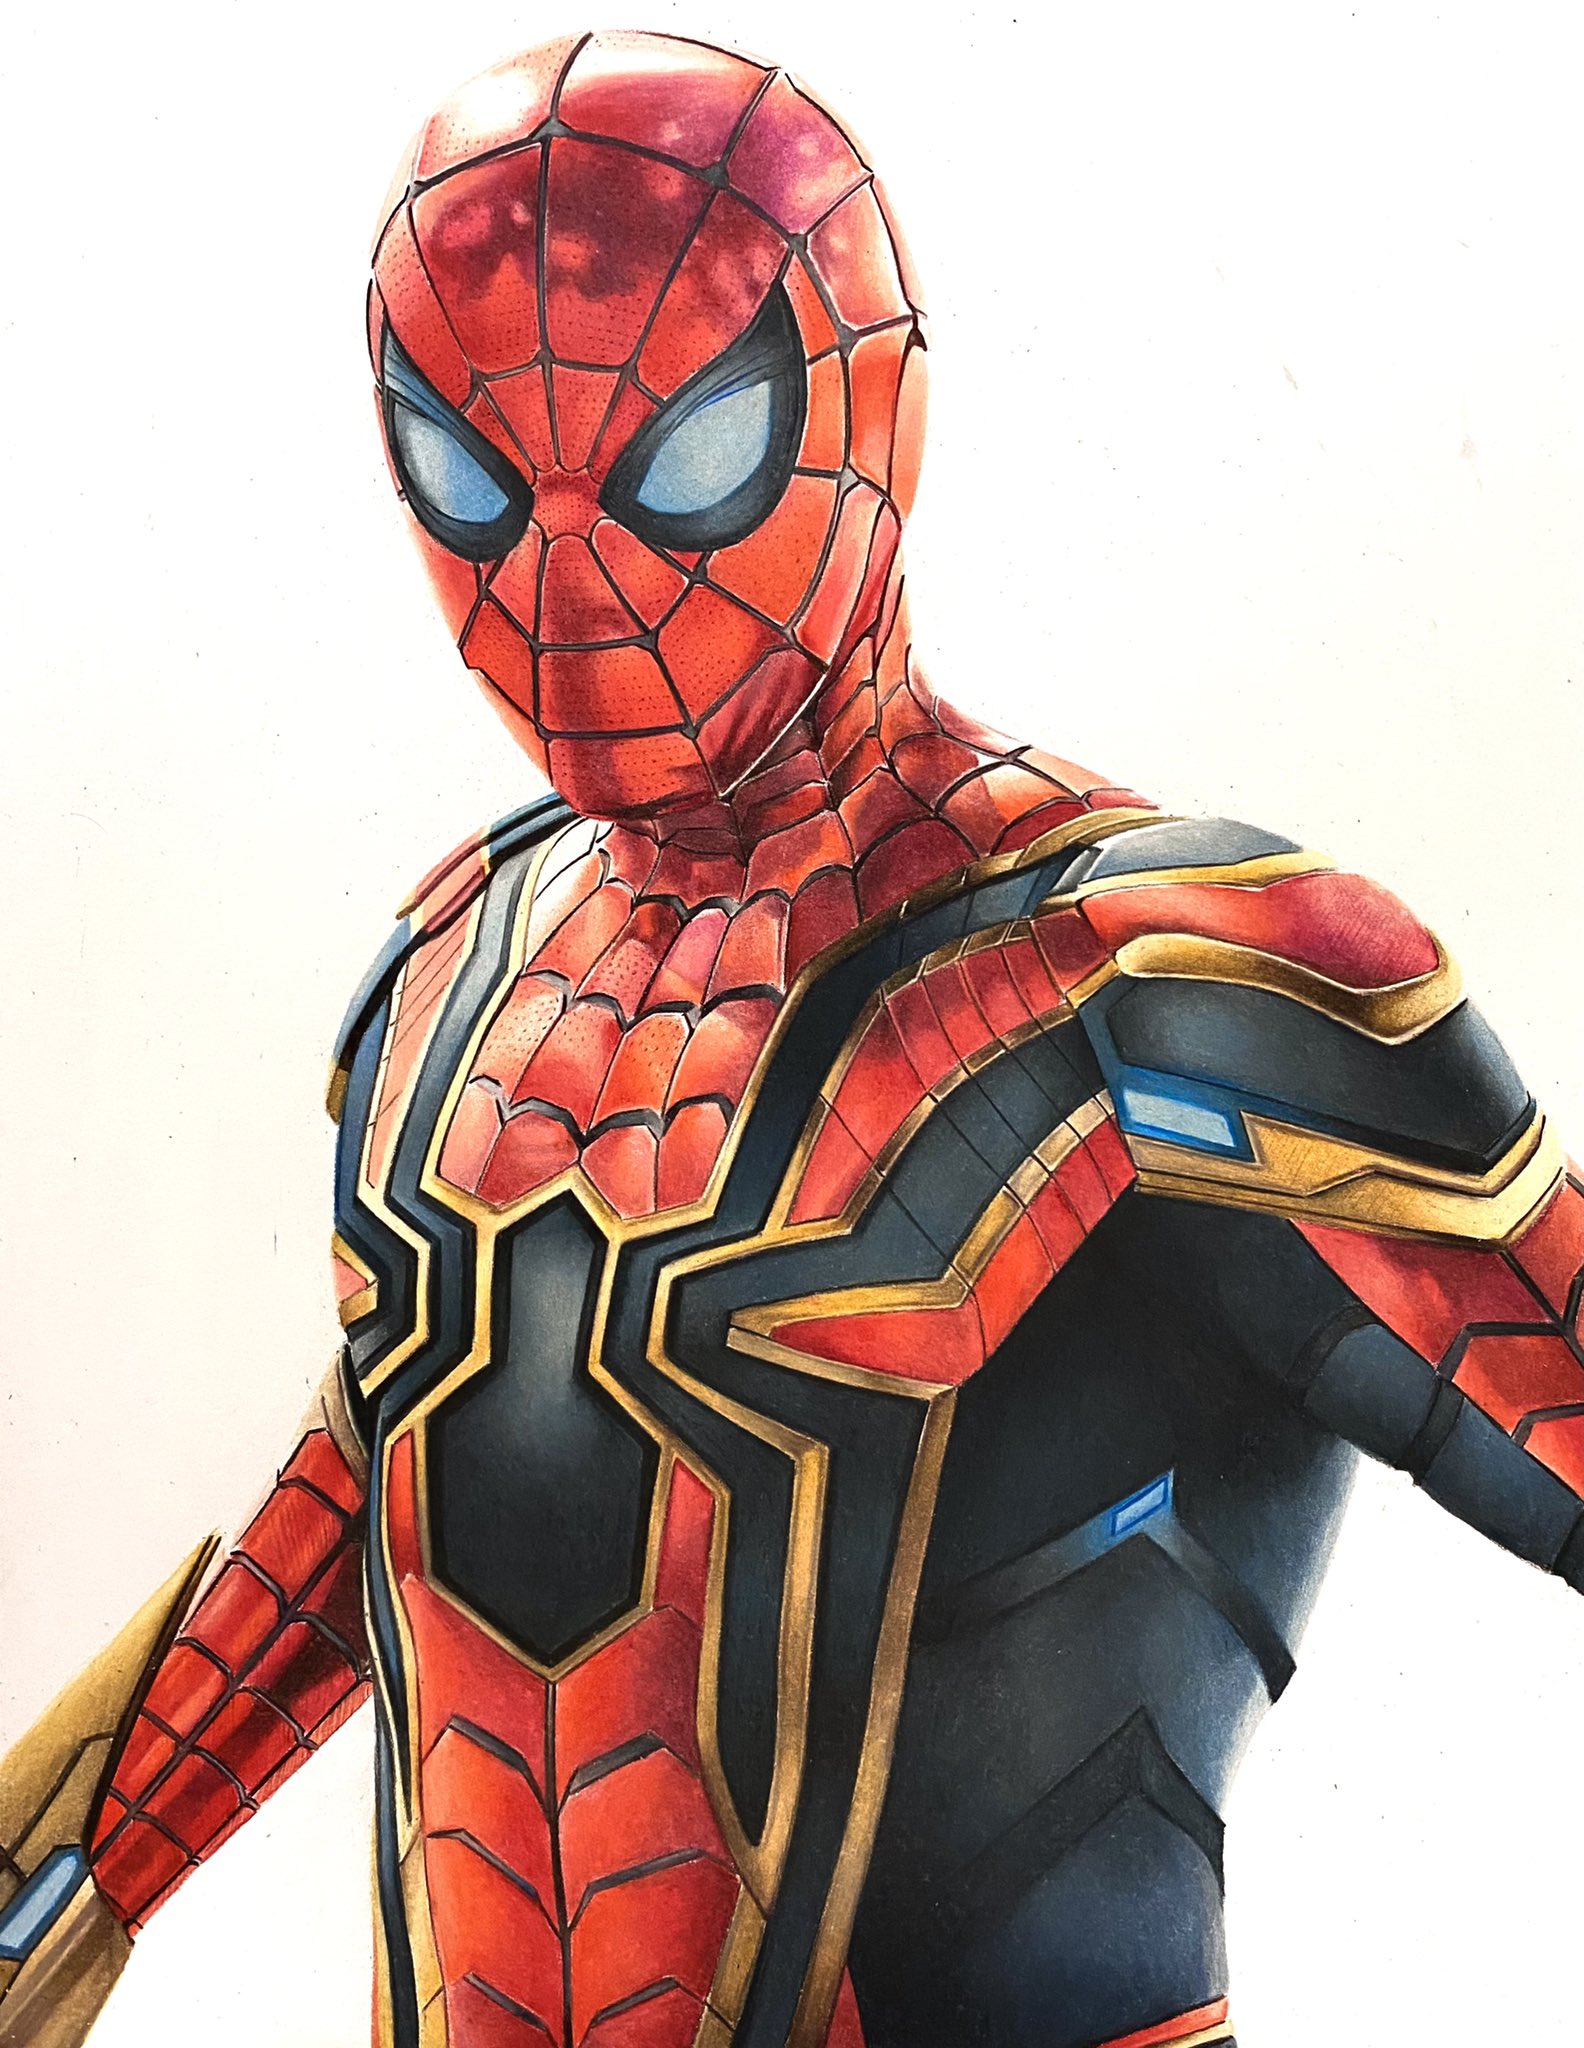 Johnny Spiderman Spidermannowayhome スパイダーマン 色鉛筆 色鉛筆でアイアン スパイダーマンを描きました ノーウェイホーム楽しみ I Drew Iron Spider Man With Colored Pencils T Co Jumejimdwn Twitter